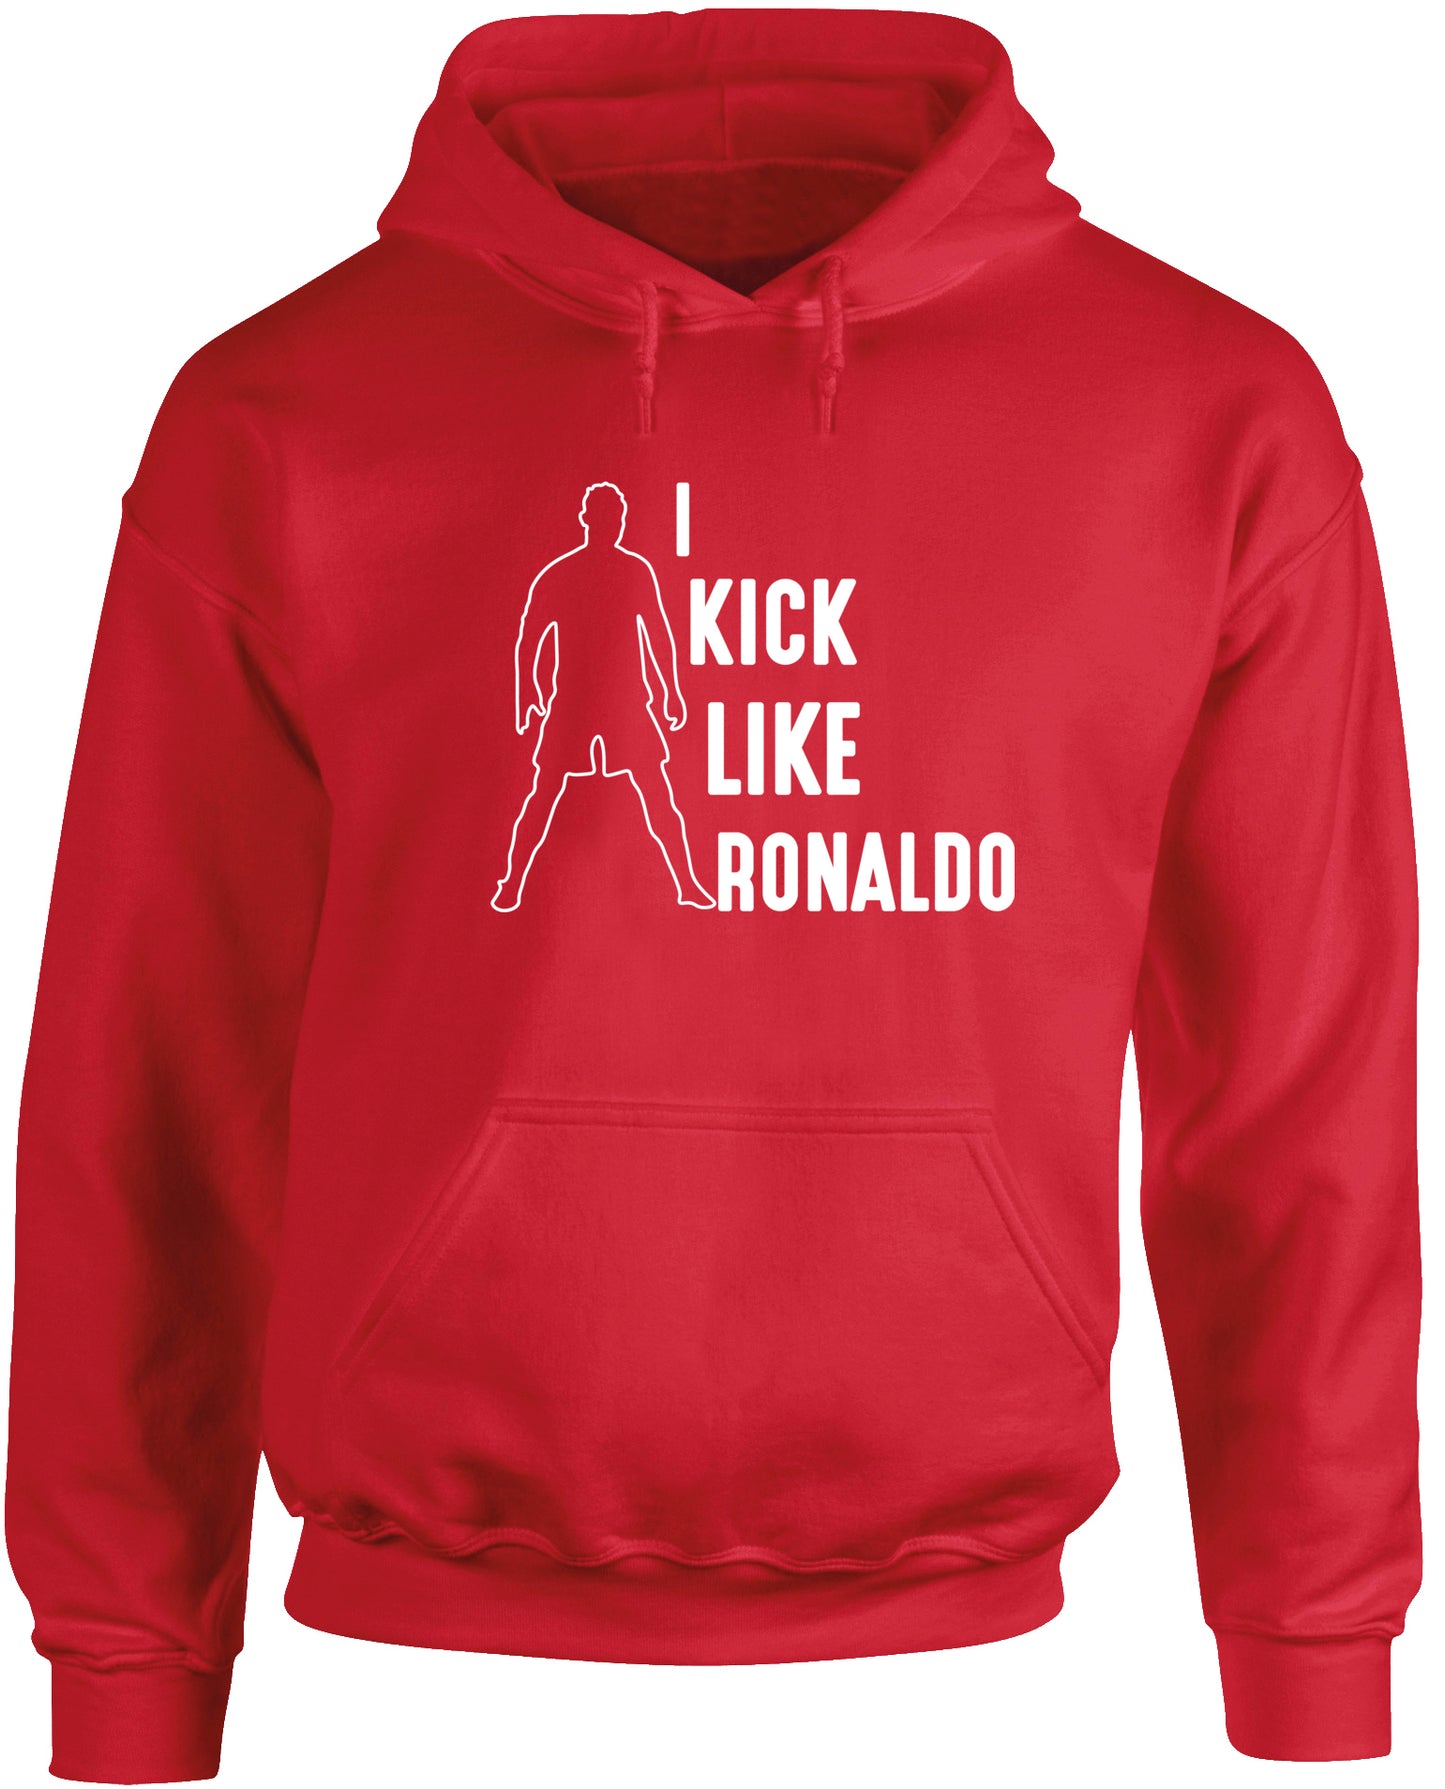 I Kick Like Ronaldo unisex Hoodie hooded top